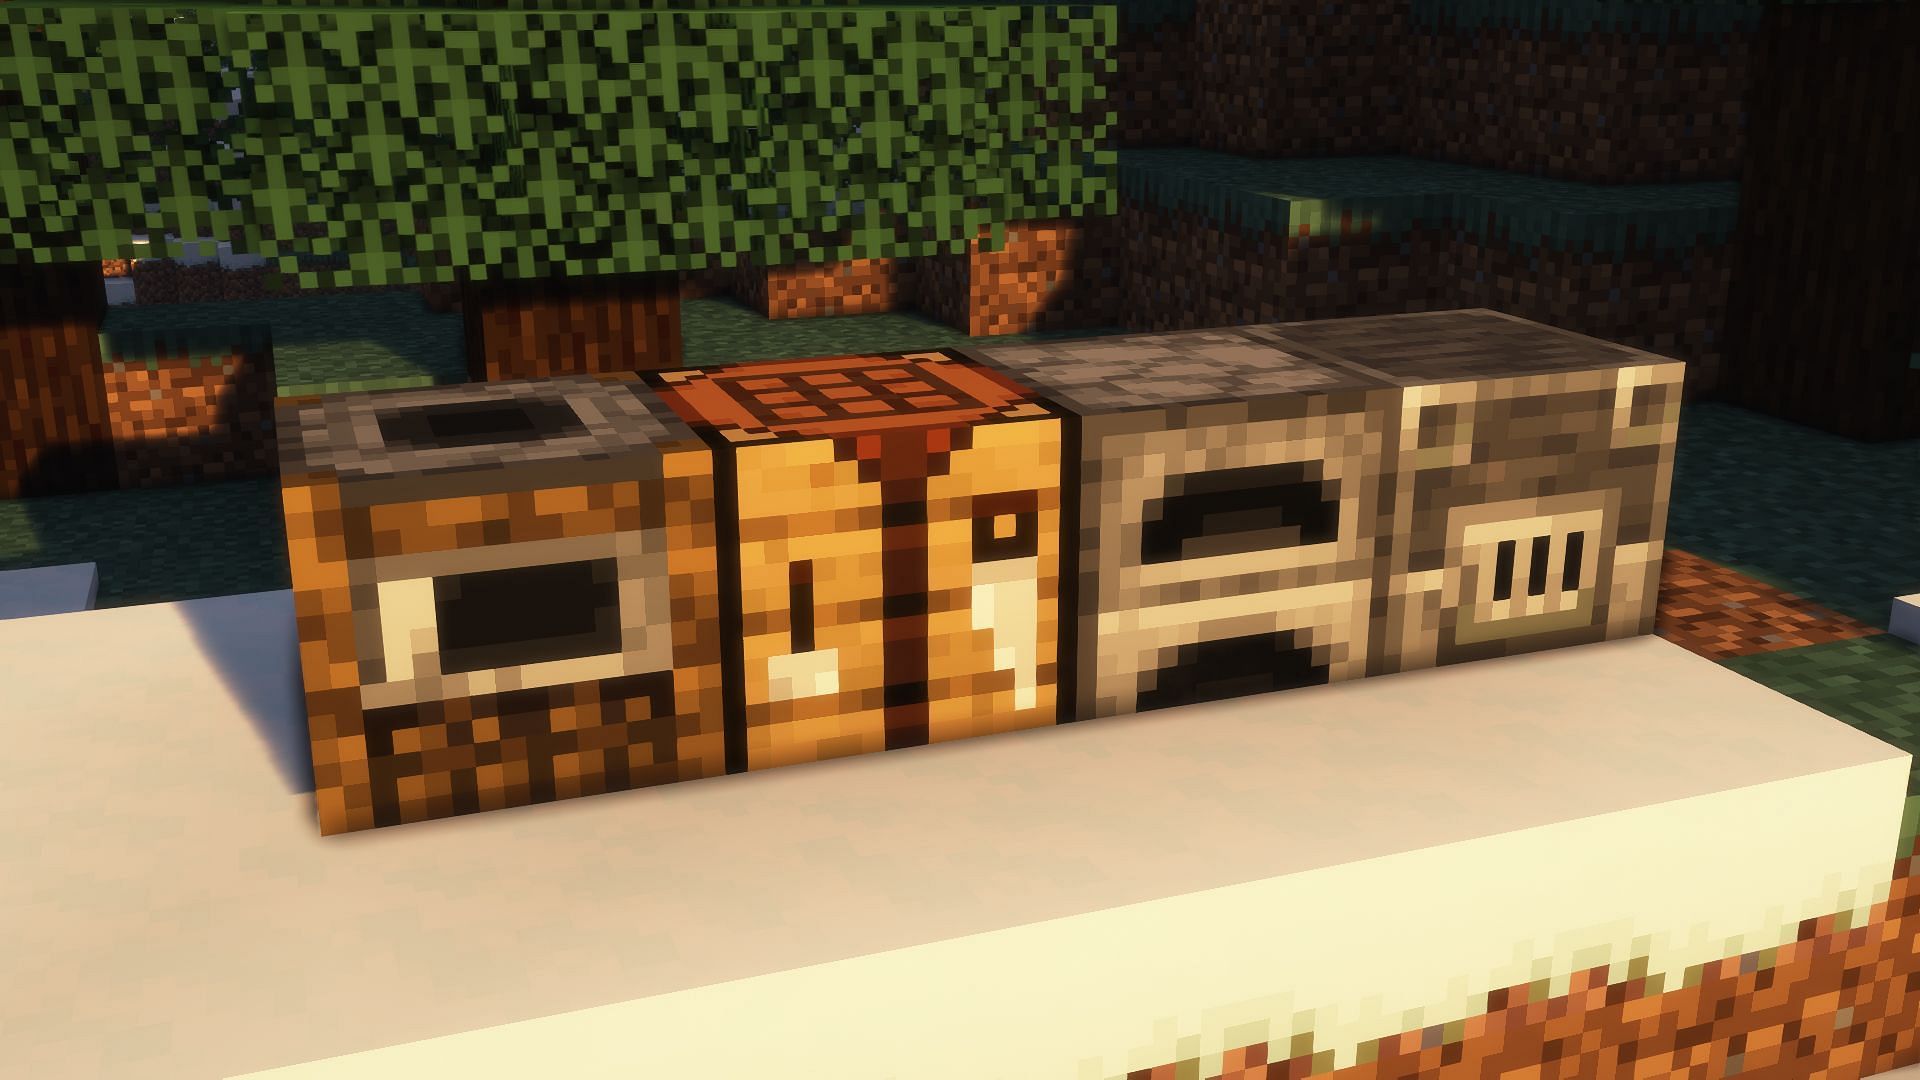 Blocks with recipe books in Minecraft (Image via Mojang)